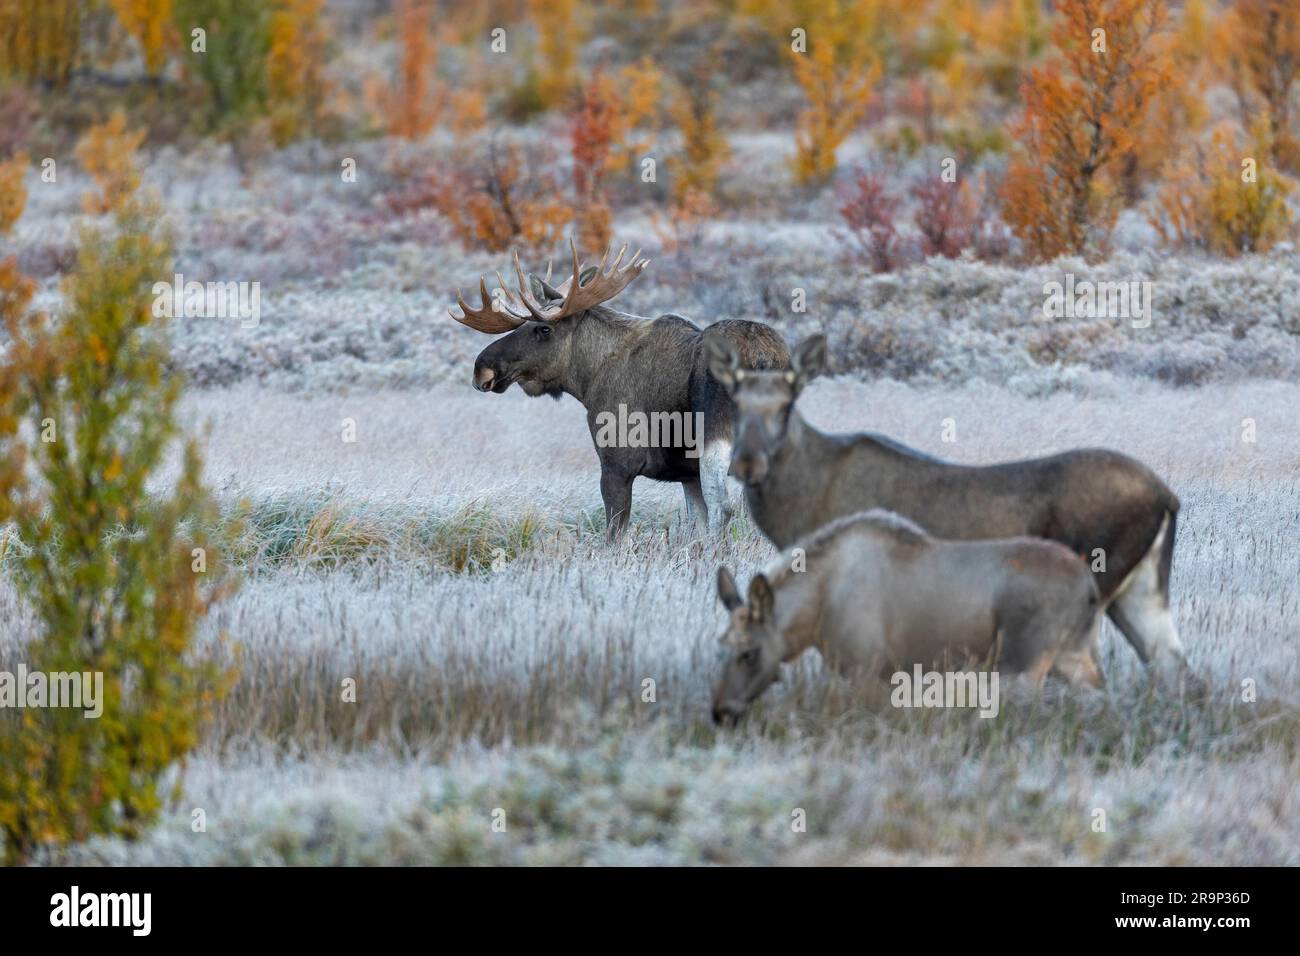 Europäischer Elch, Moose (Alces alces). Familie im Fulufjaellet-Nationalpark im Herbst. Schweden Stockfoto